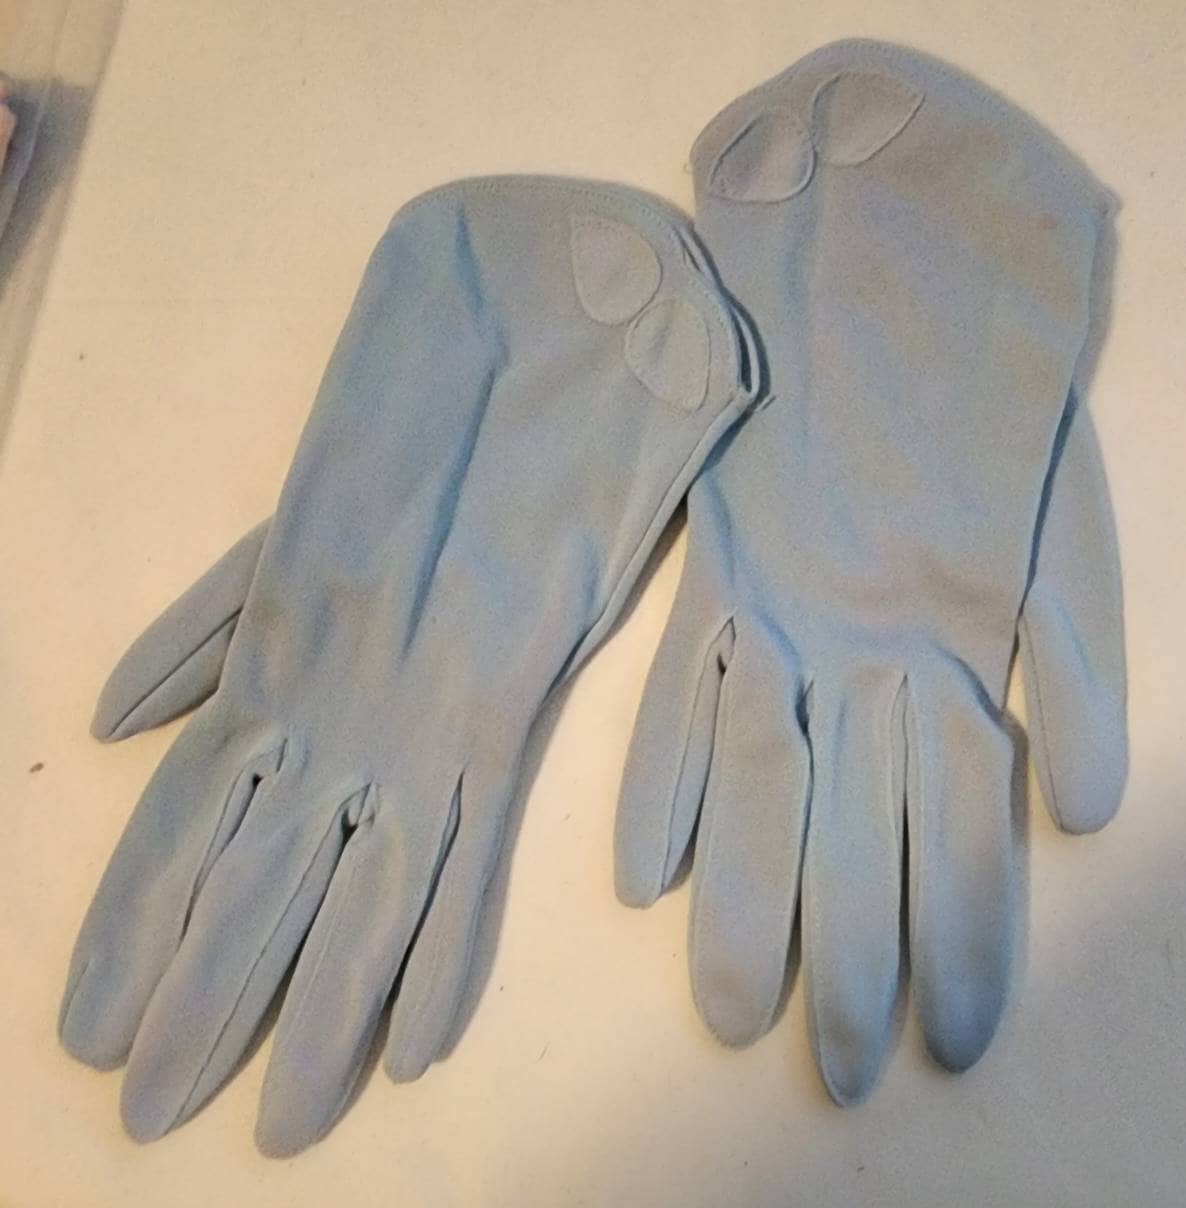 Vintage Blue Gloves 1950s 60s Periwinkle Blue Nylon Stretch Fabric Wrist Gloves Stylized Petals Mid Century Rockabilly Boho 7.5 to 8.5